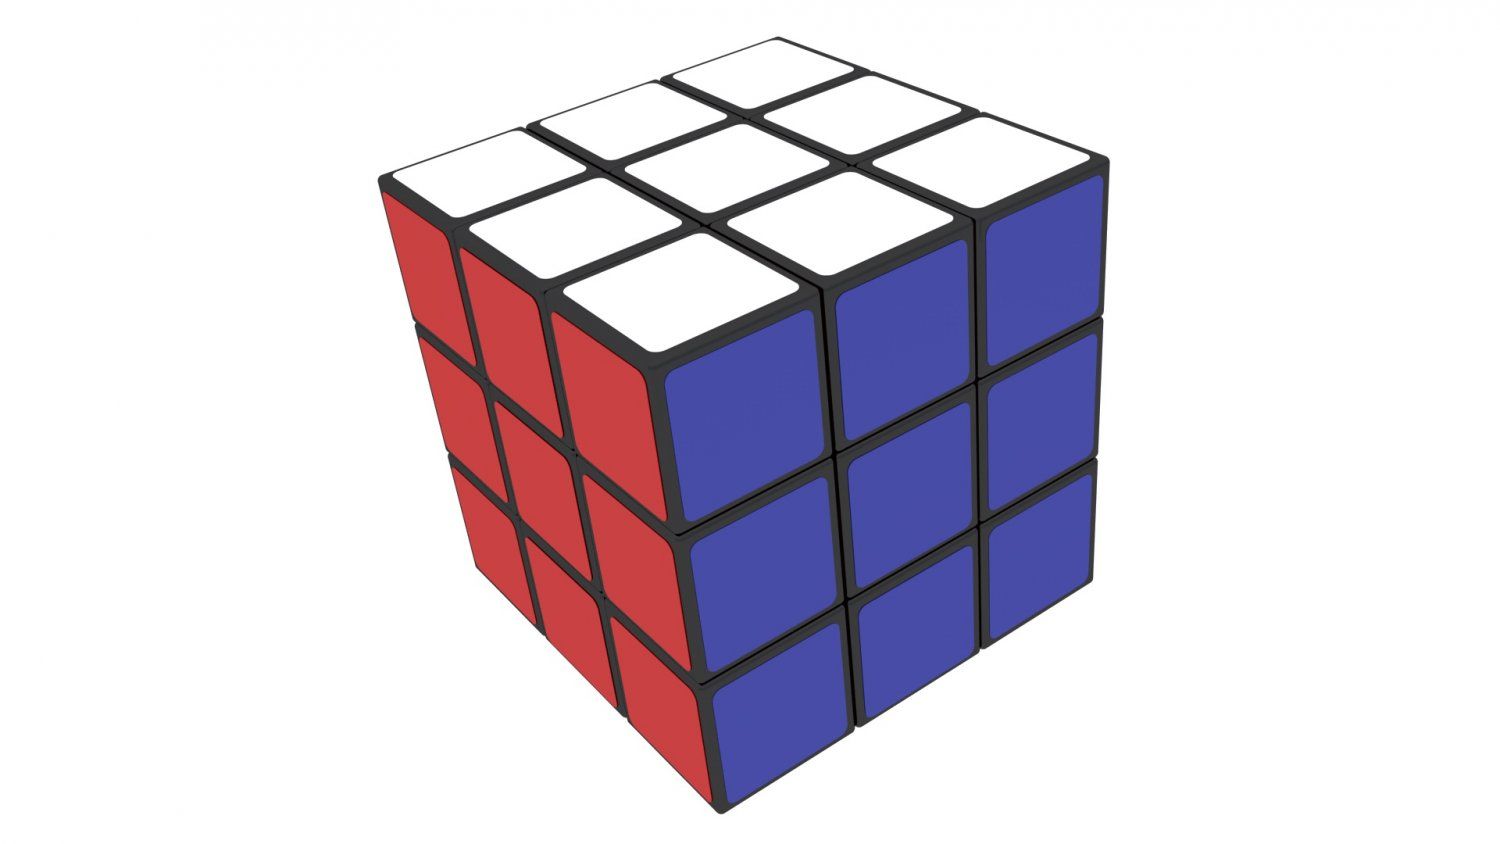 3x3x3 куб модель черно-белая